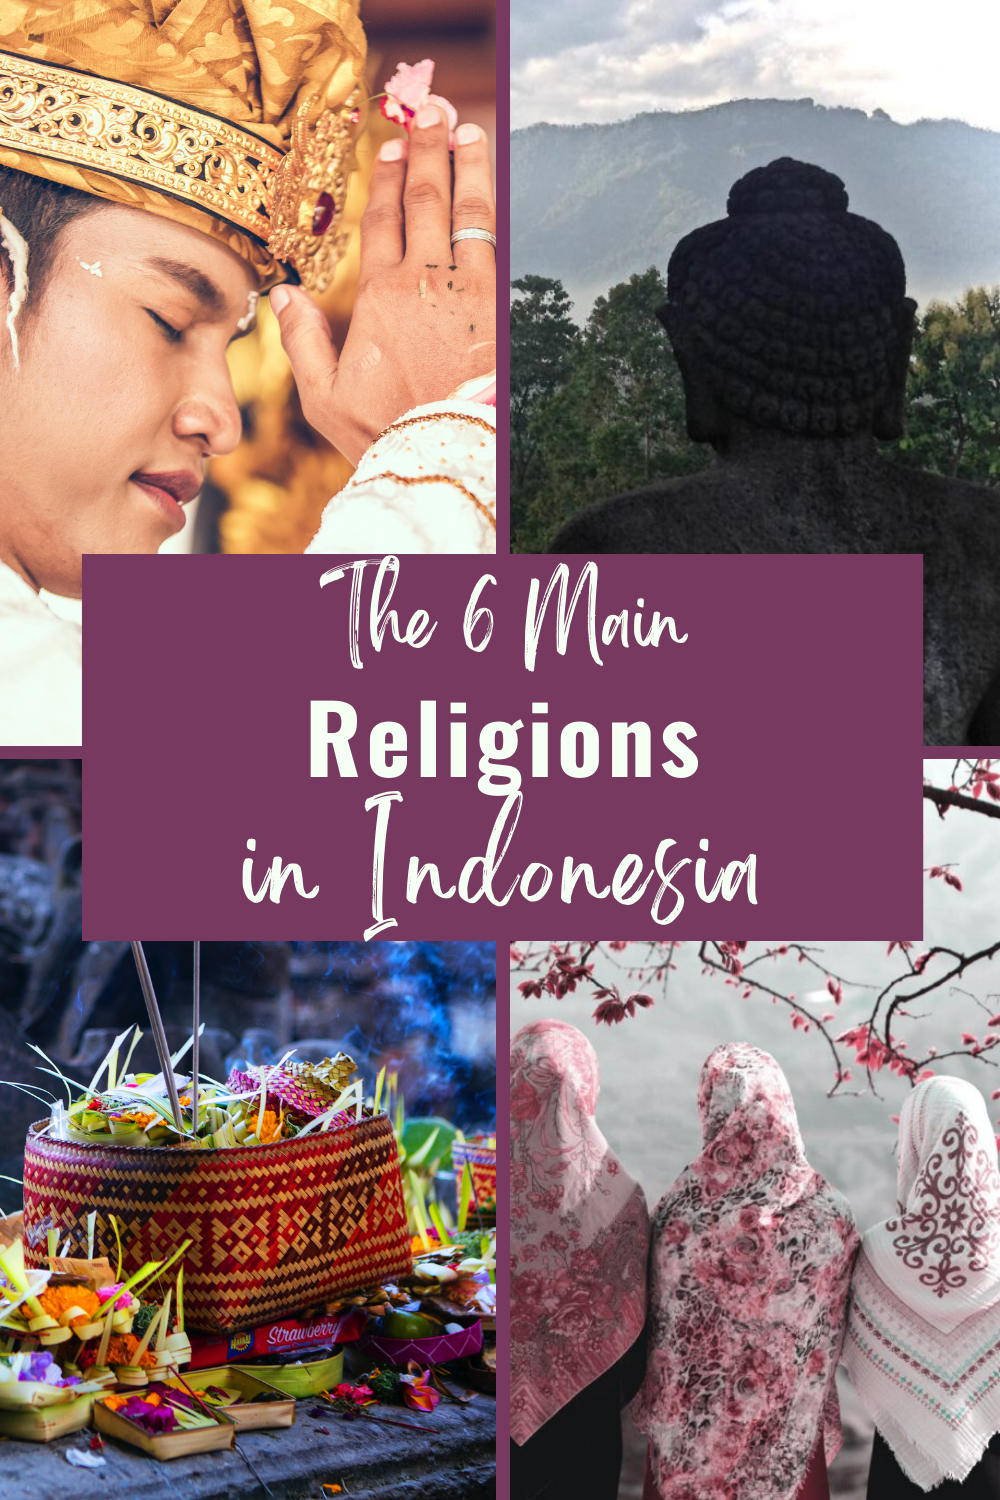 Religions in Indonesia